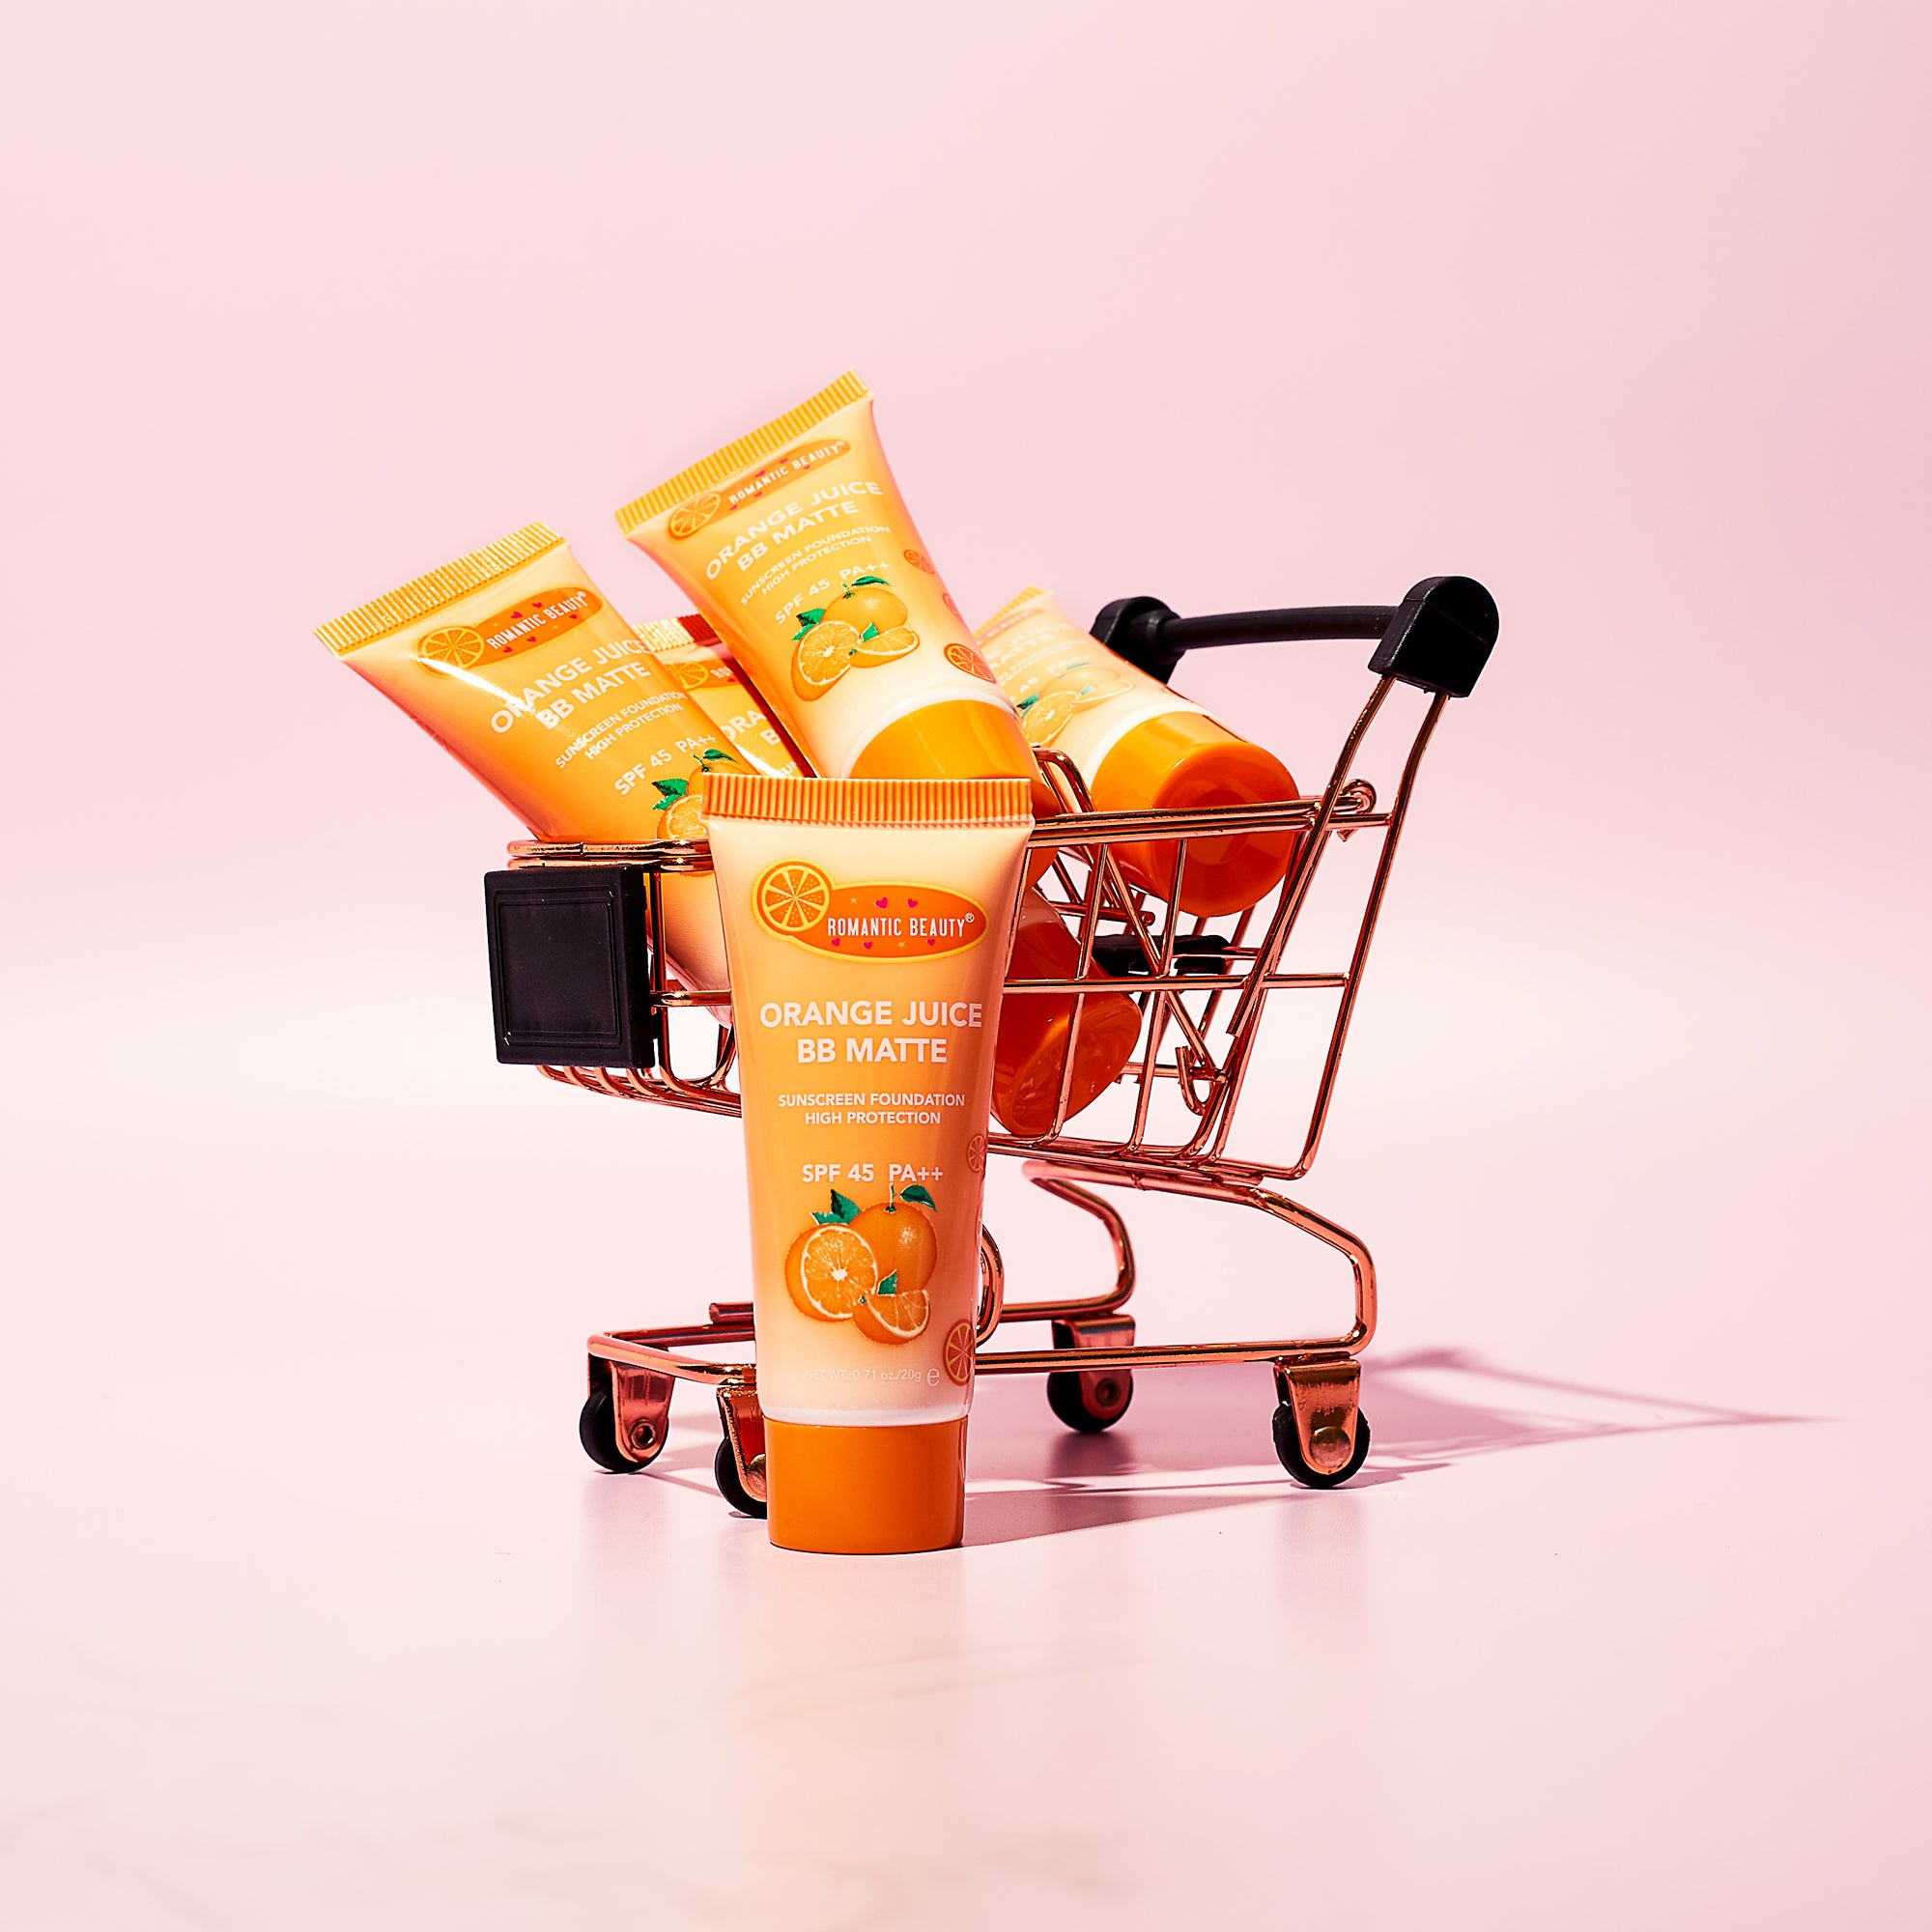 Orange Juice BB Matte Sunscreen Foundation